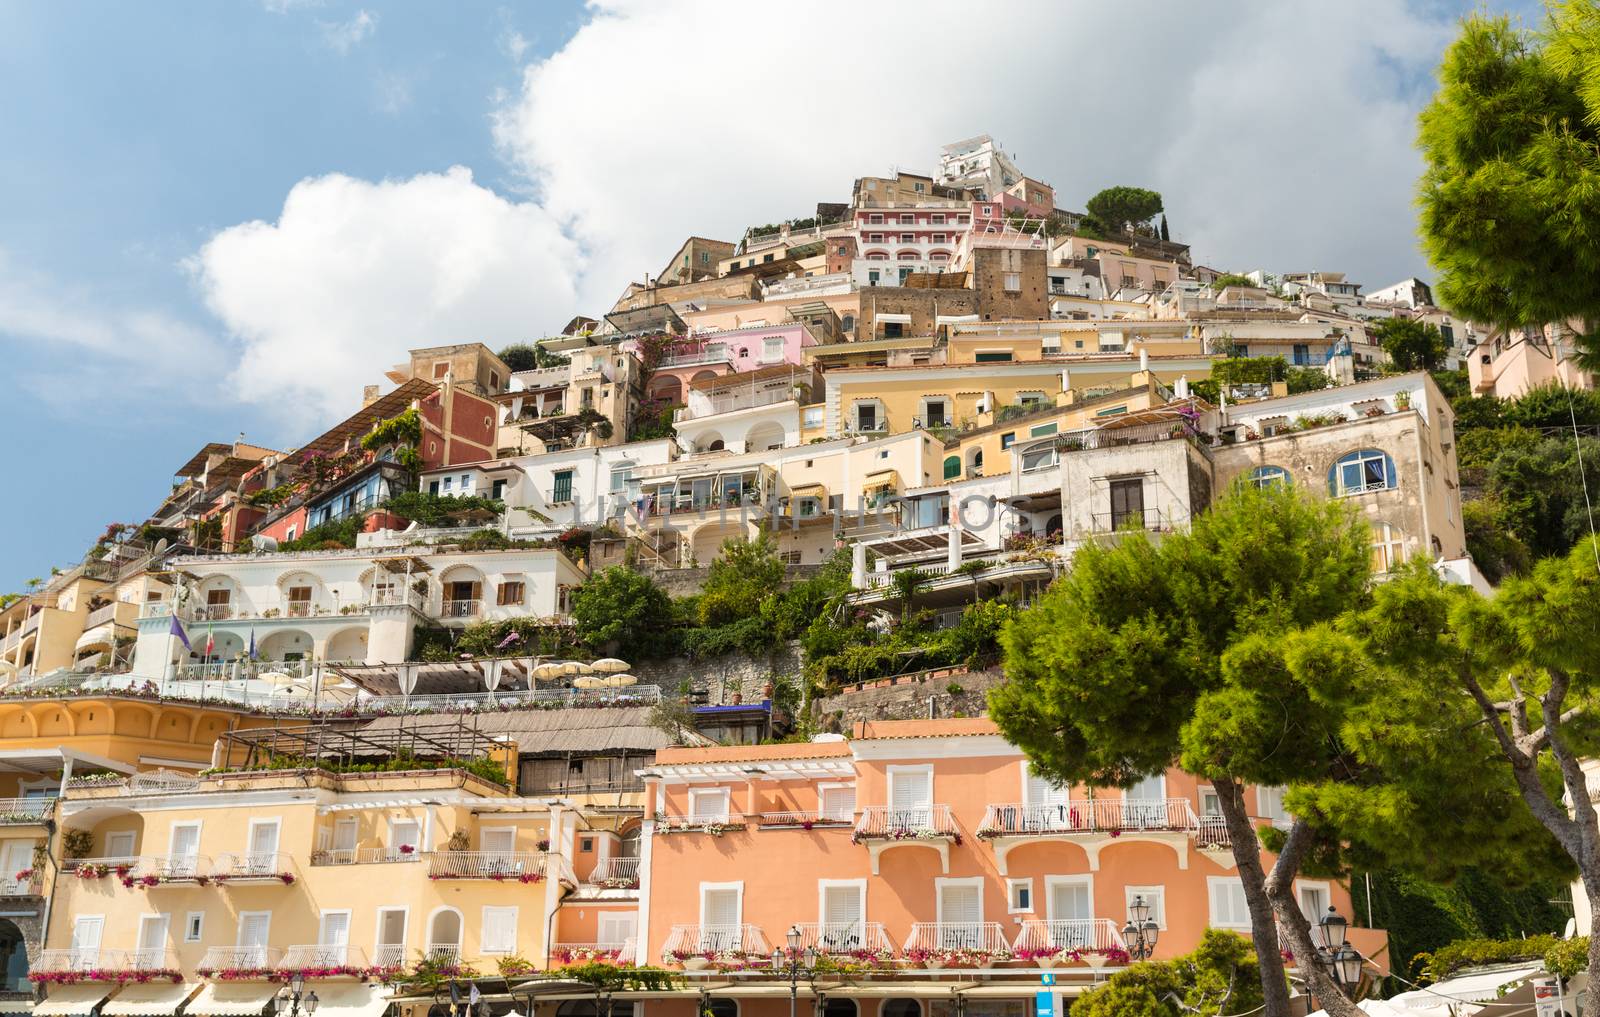 Positano on the Amalfi Coast by chrisukphoto